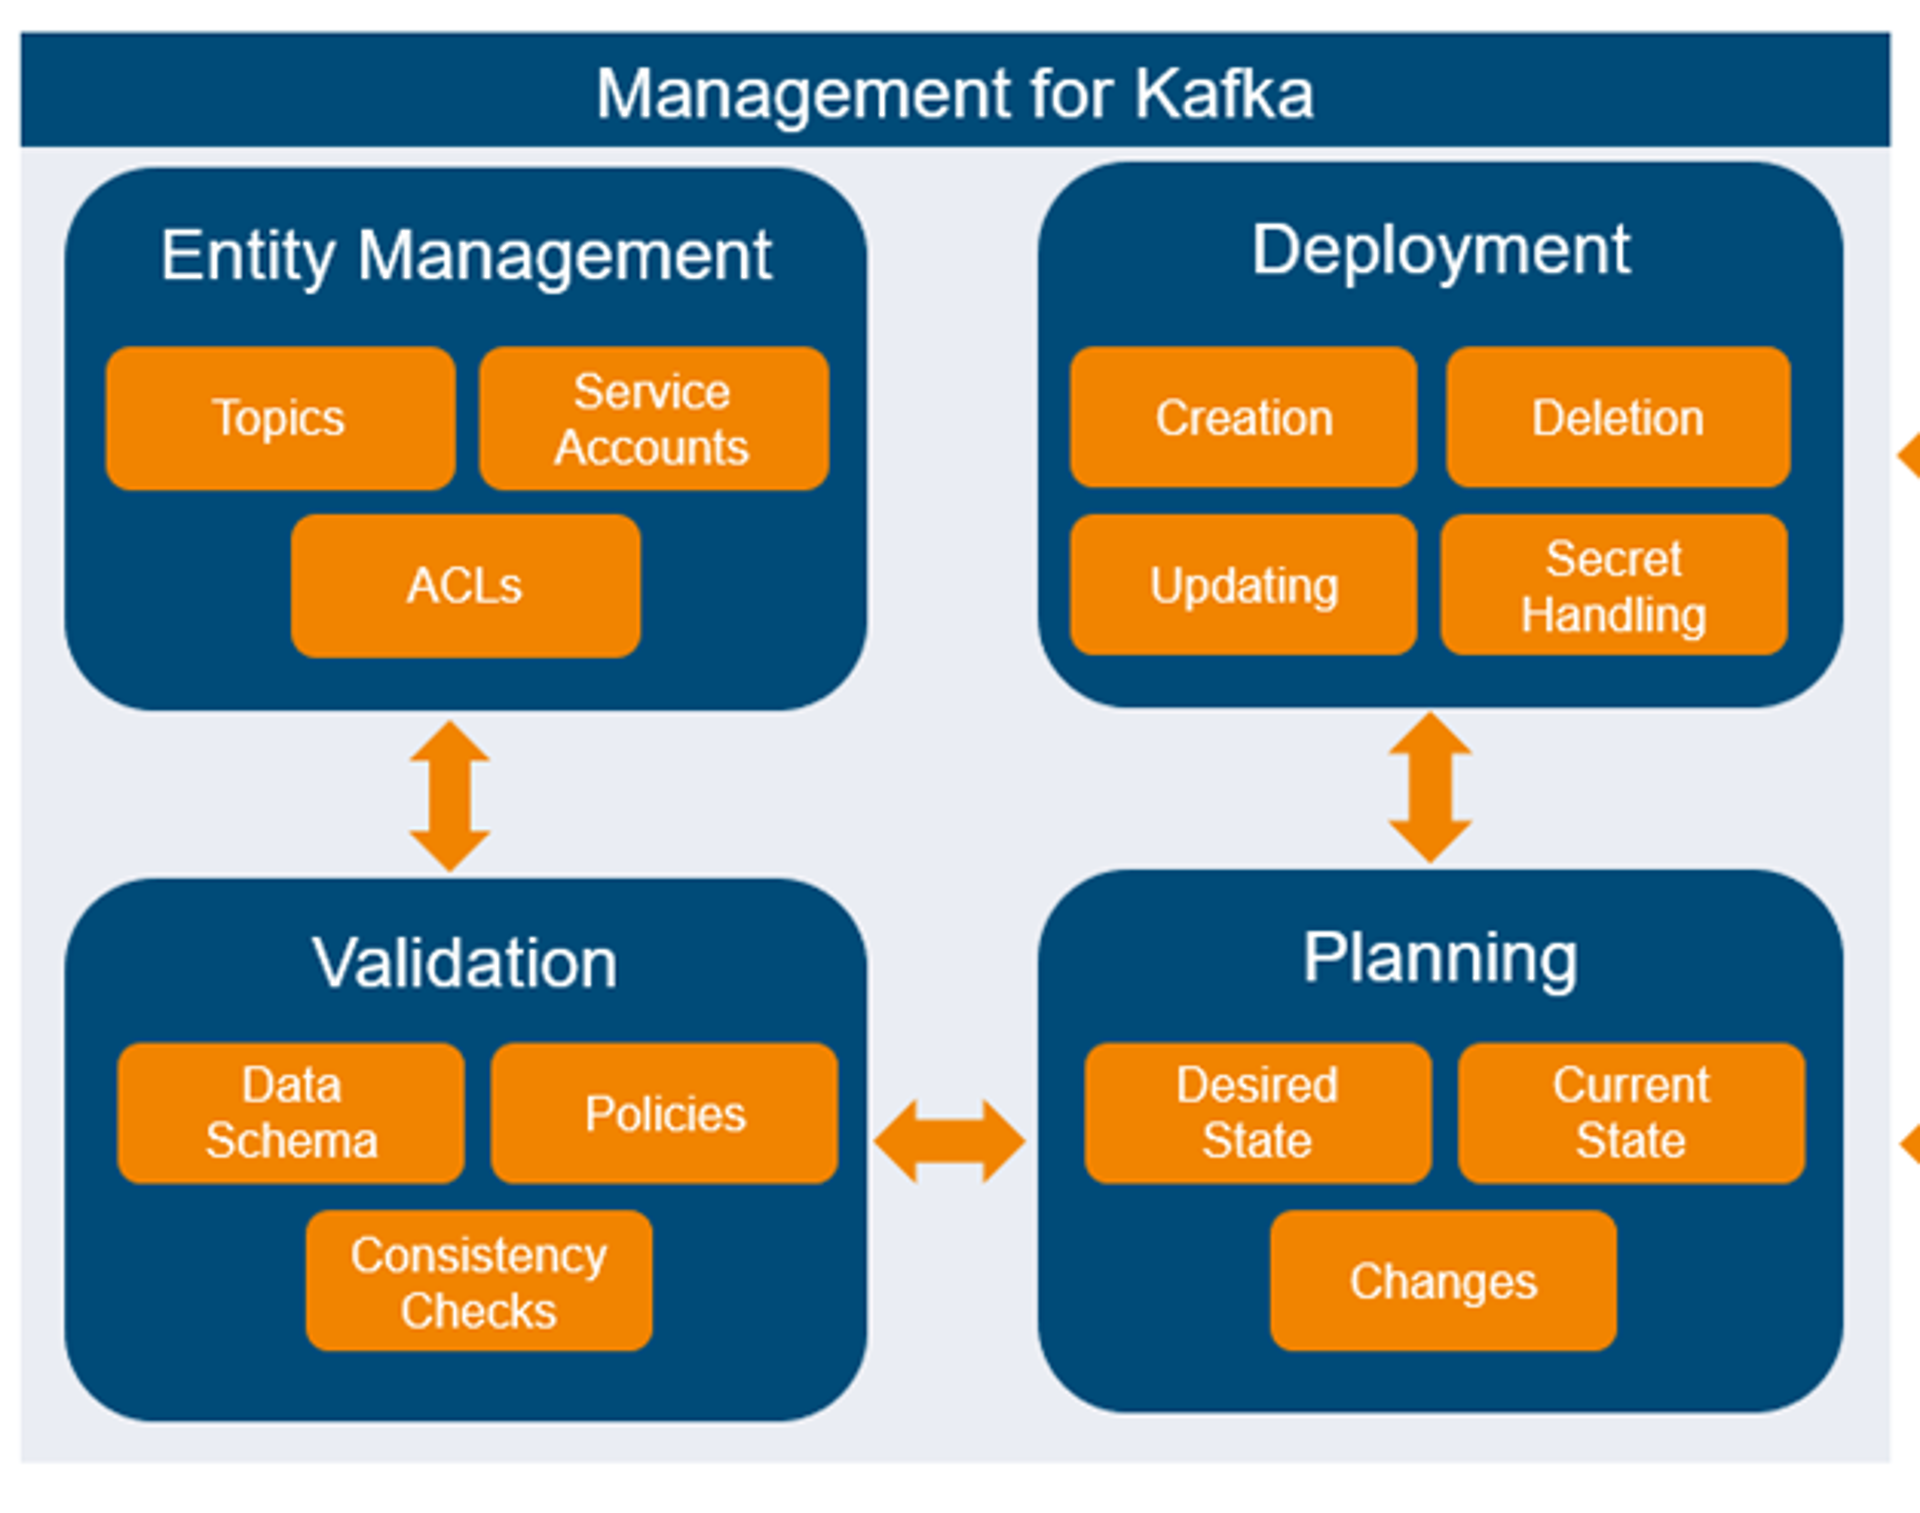 management of kafka grafic